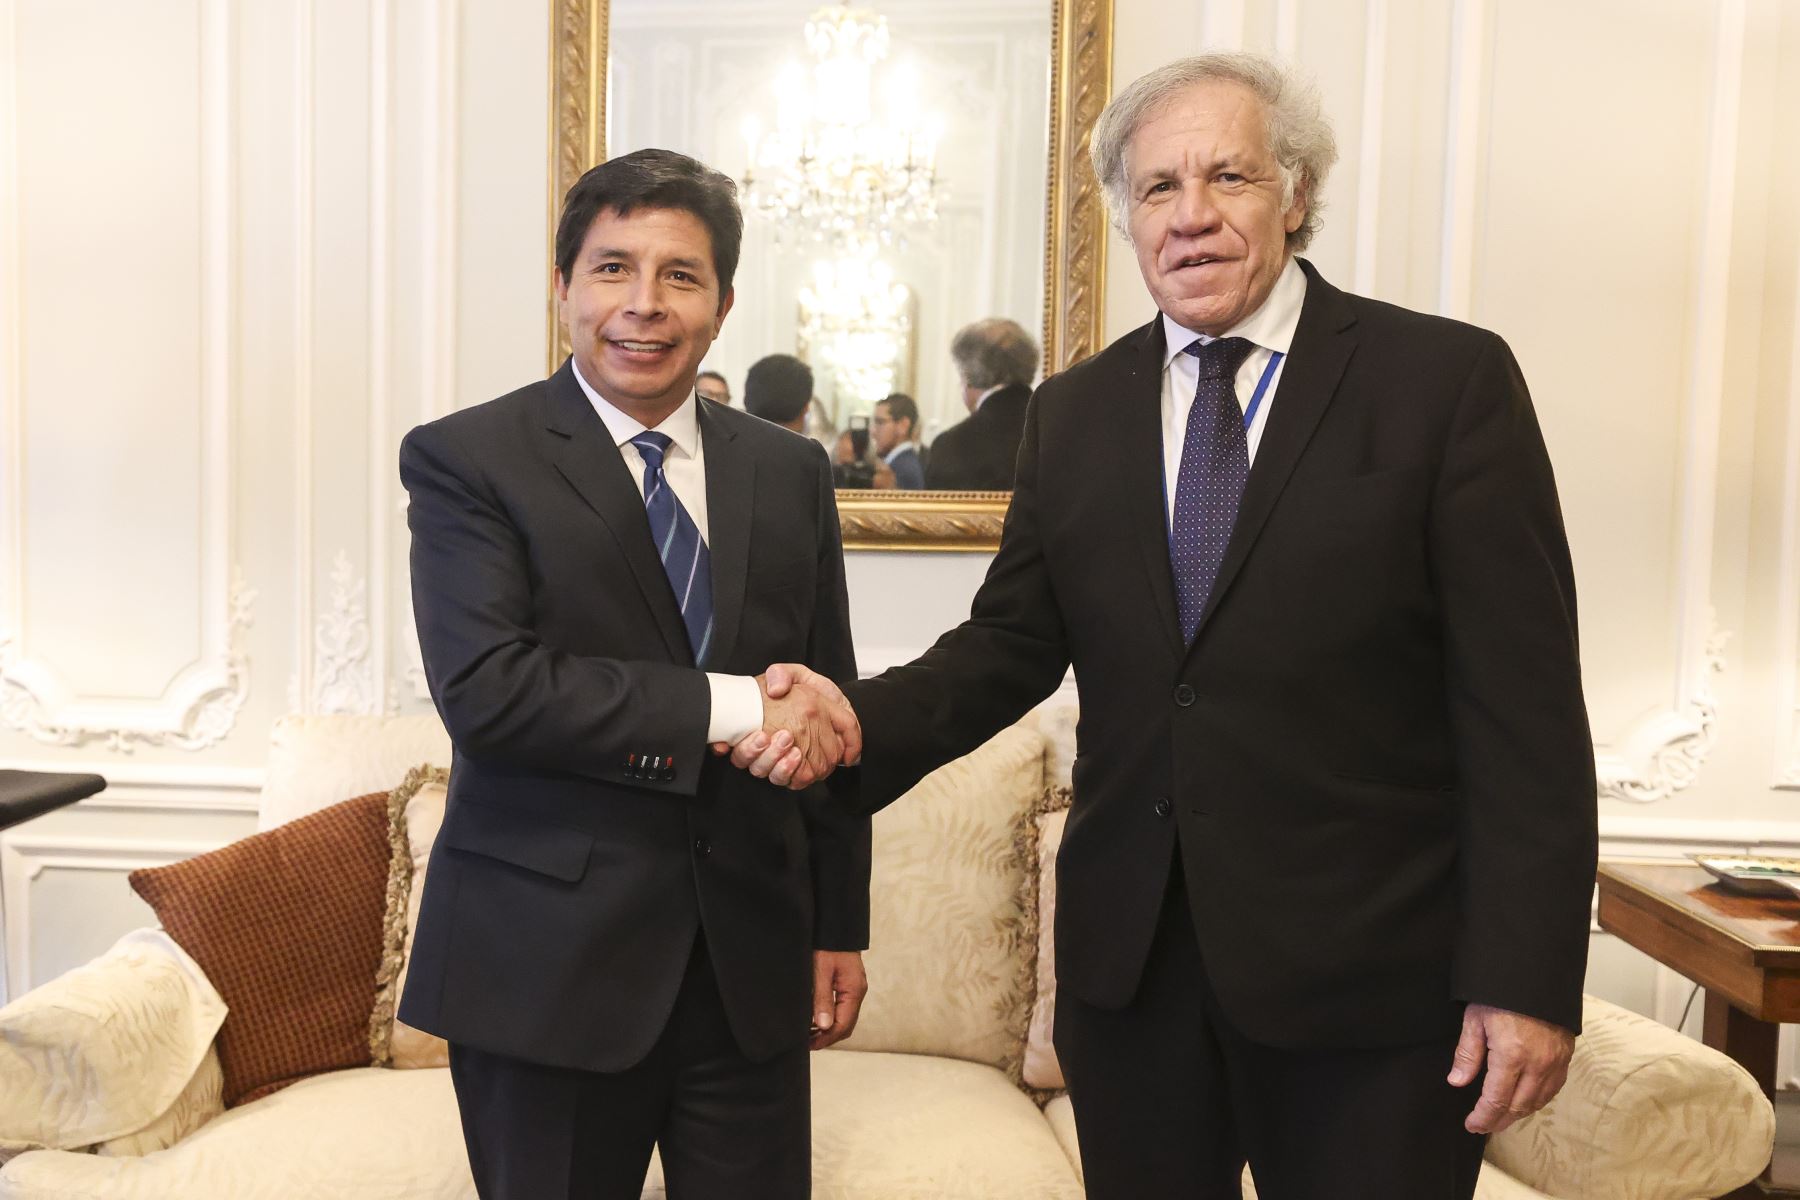 Presidente Pedro Castillo se reunió con el secretario general de la OEA, Luis Almagro. Foto: ANDINA/ Prensa Presidencia/ Vidal Tarqui Palomino